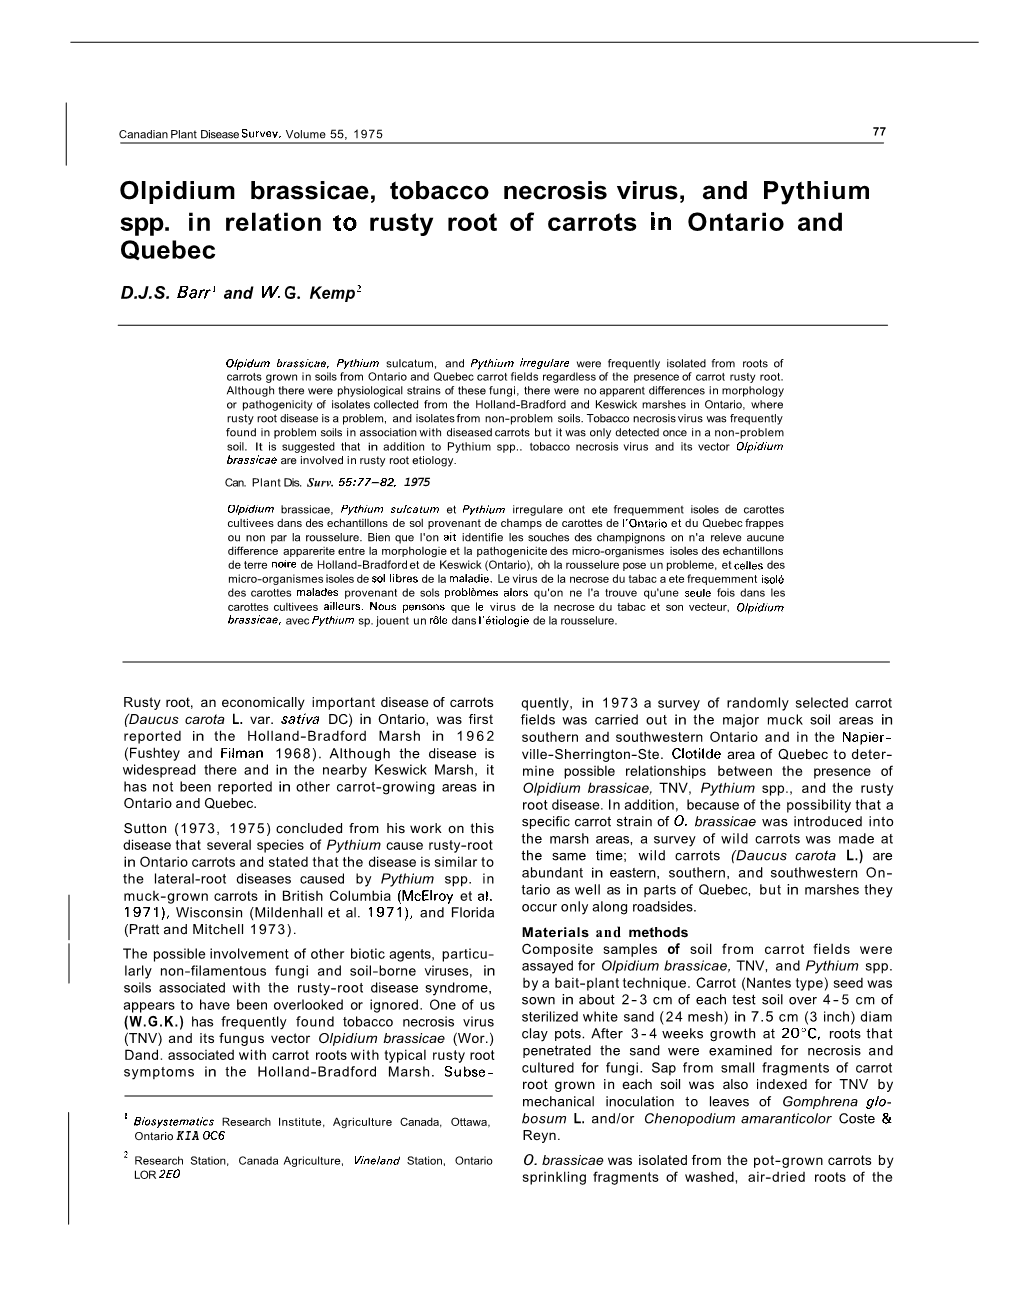 Olpidium Brassicae, Tobacco Necrosis Virus, and Pythium Spp. in Relation to Rusty Root of Carrots in Ontario and Quebec